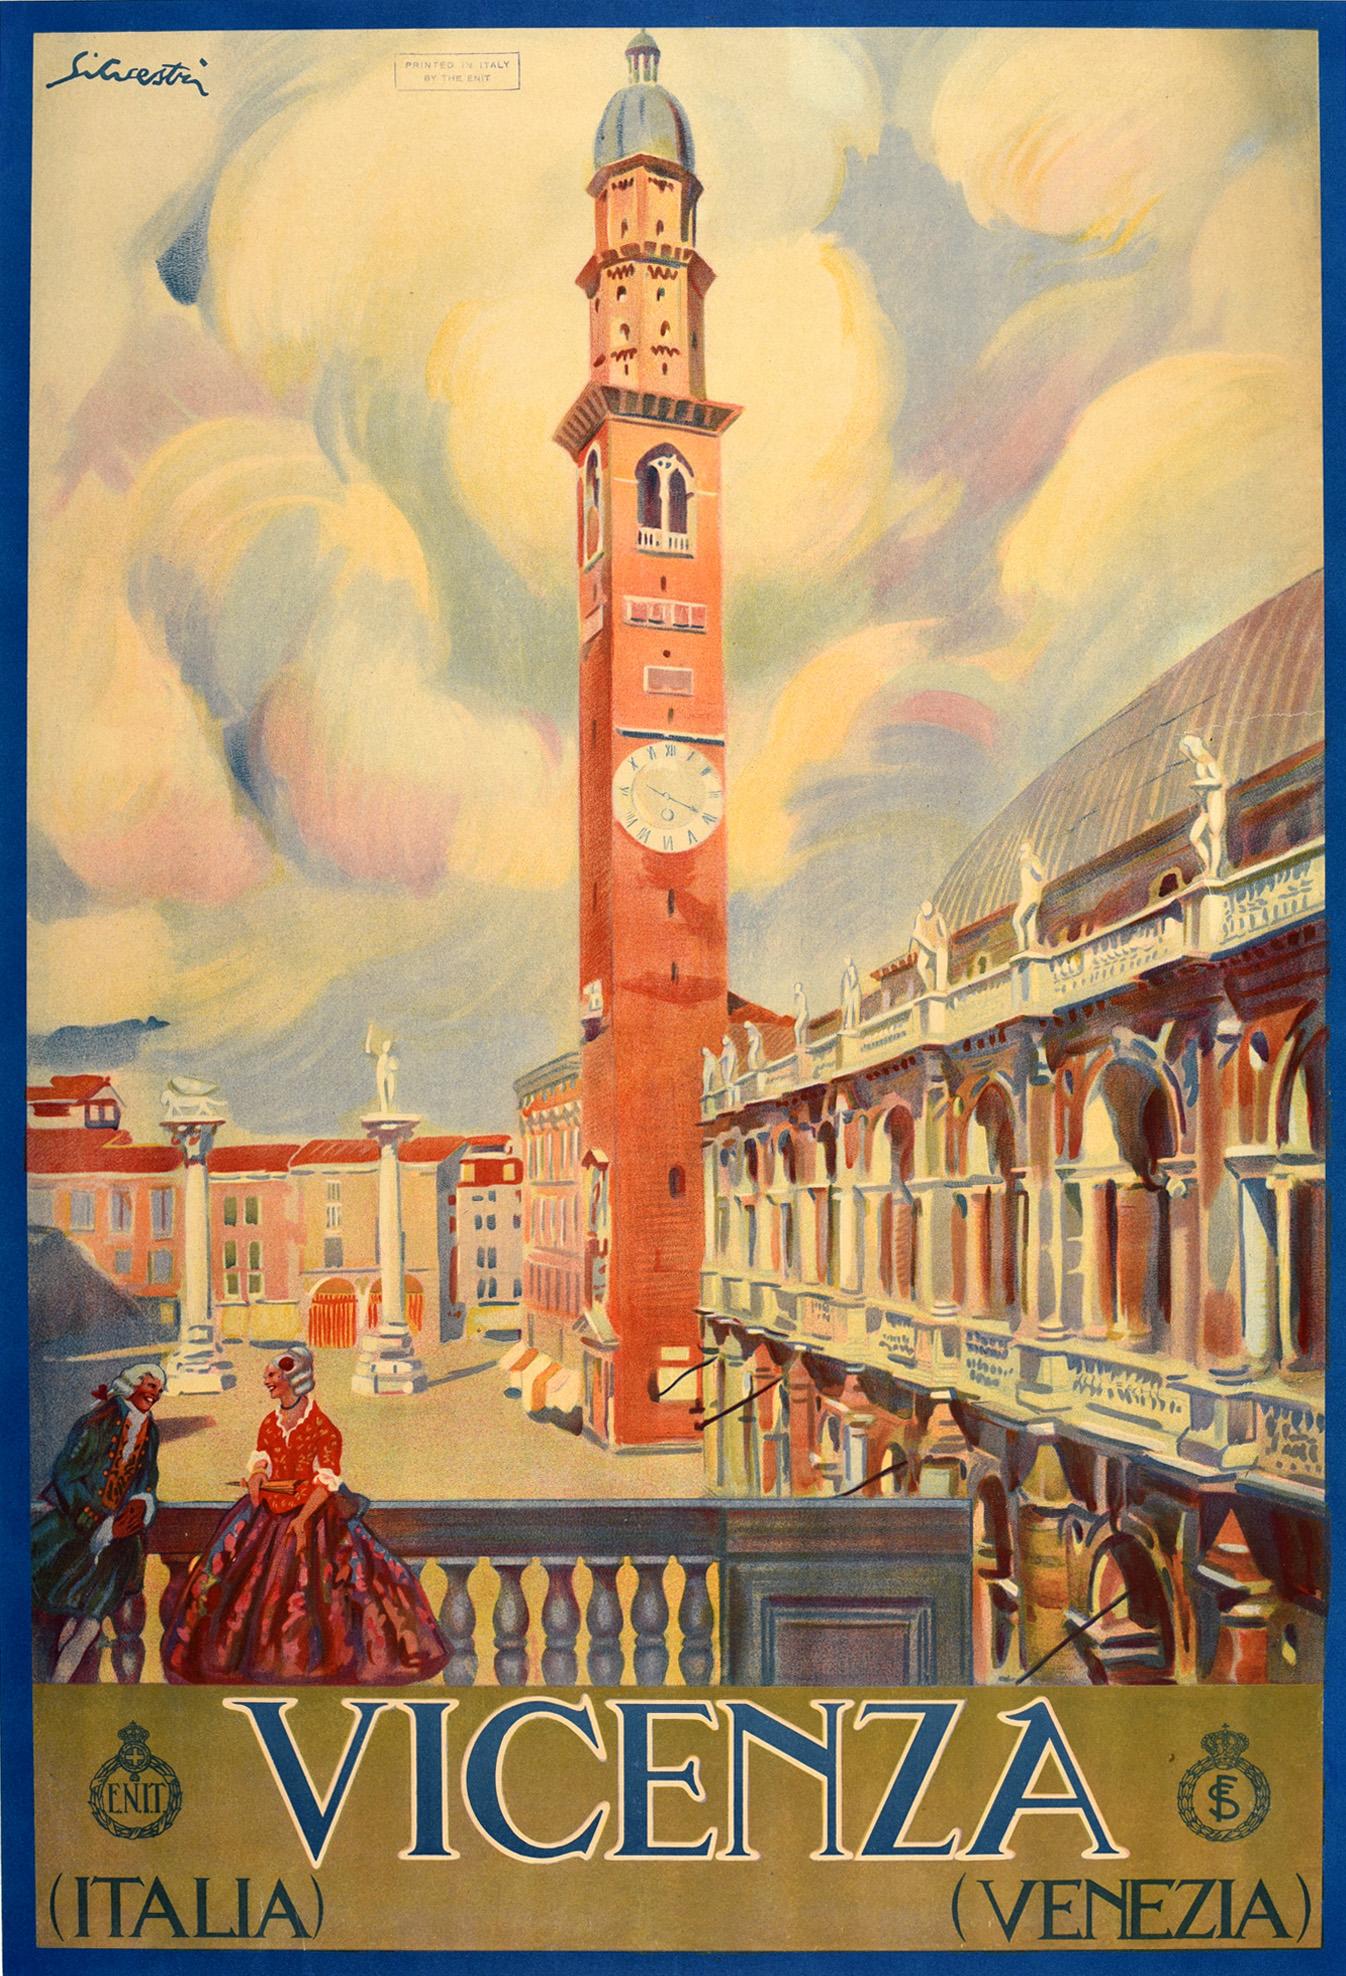 TX319 Vintage 1949 Torino Turin Italy Italian Travel Poster Re-Print A1/A2/A3/A4 